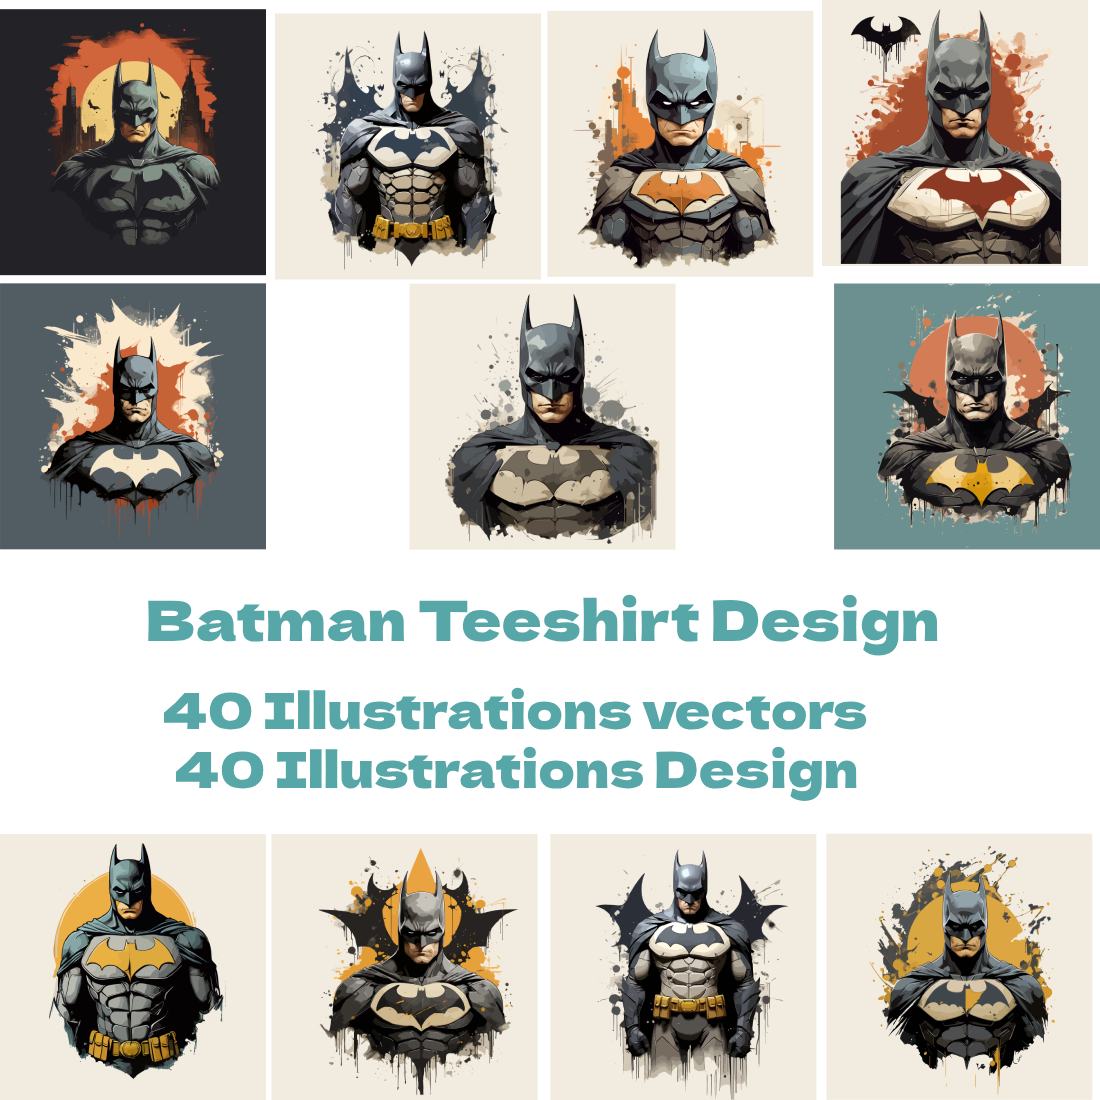 Batman Illustrations cover image.